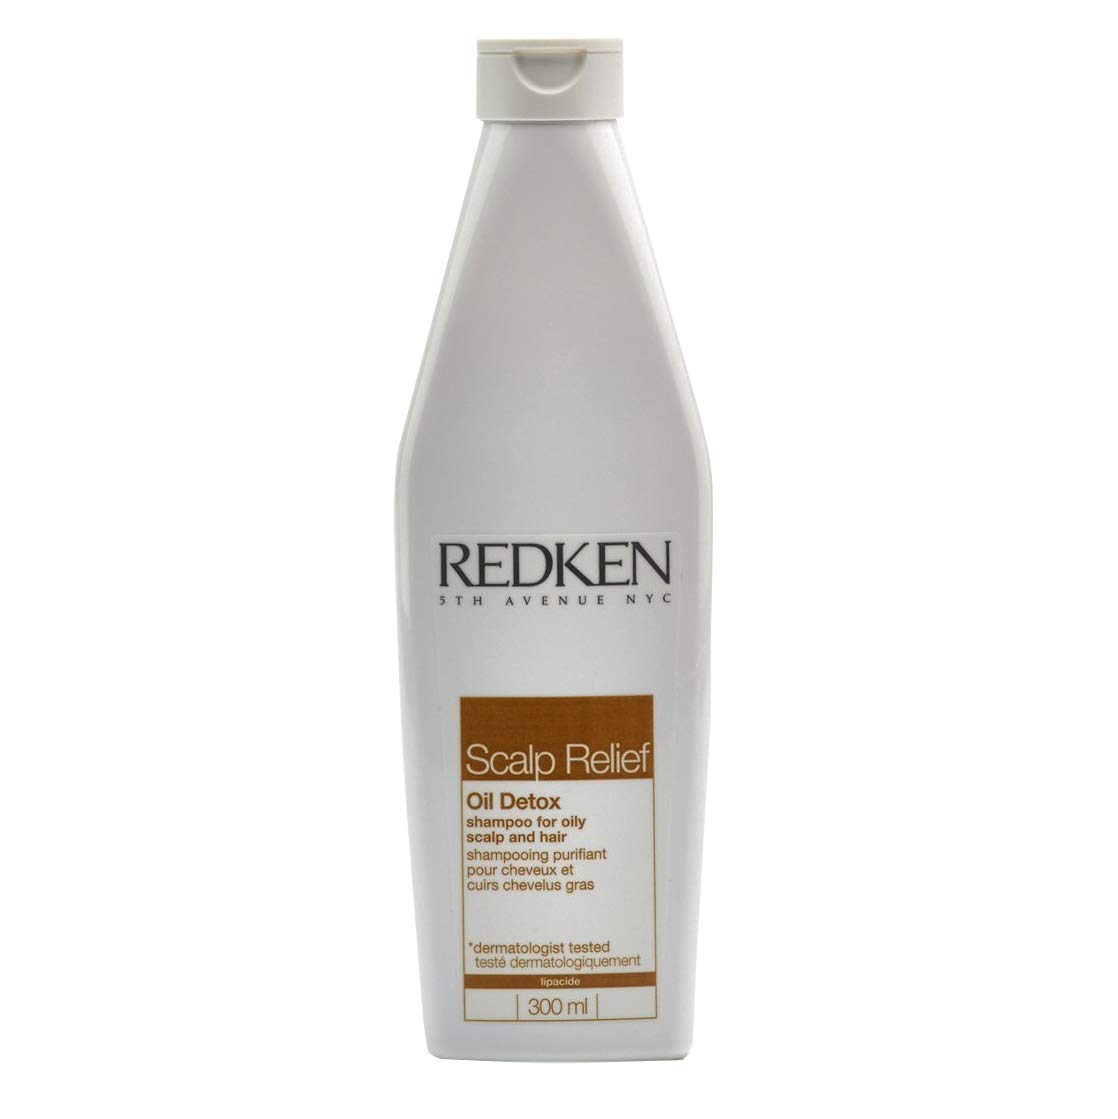 Redken Scalp Relief Oil Detox Shampoo Reviews